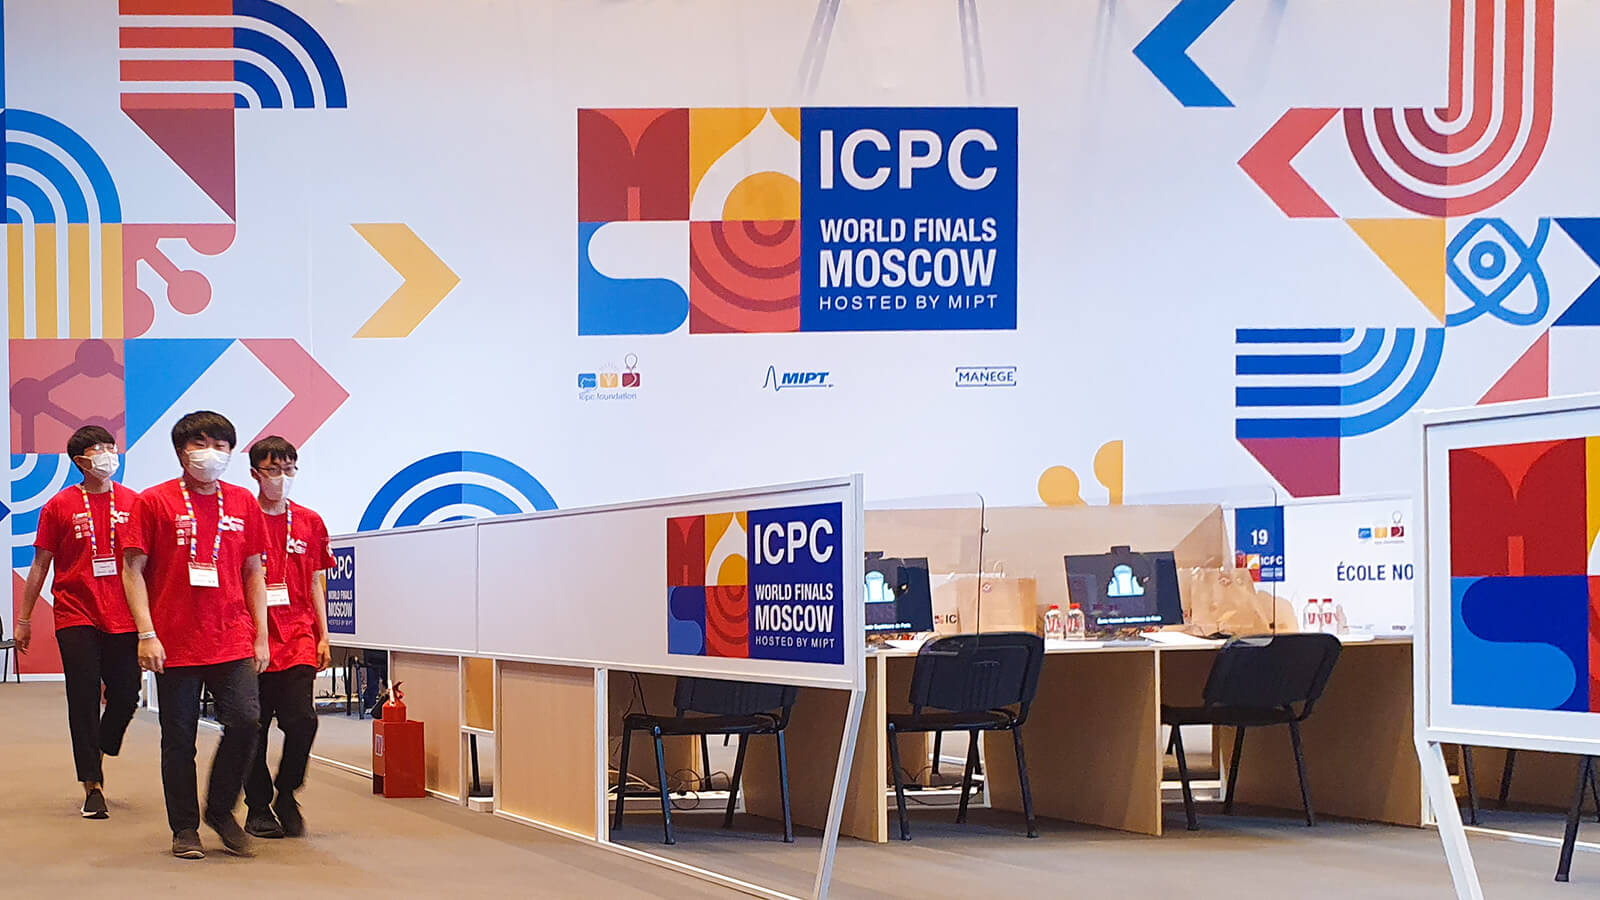 ICPC World Finals Moscow에서 서강대학교 Redshift 팀이 입장하는 모습을 촬영한 사진.